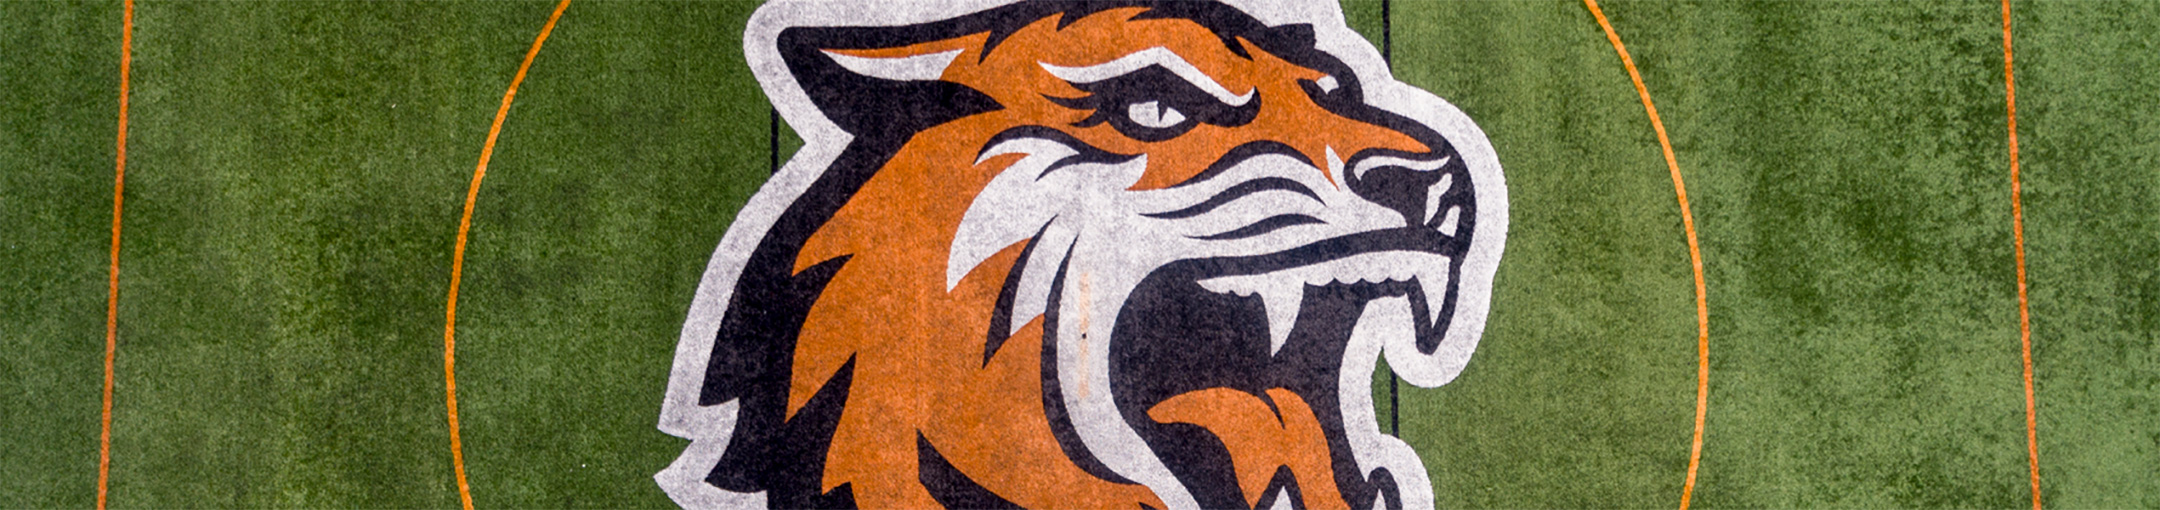 RIT Tiger logo on the field.